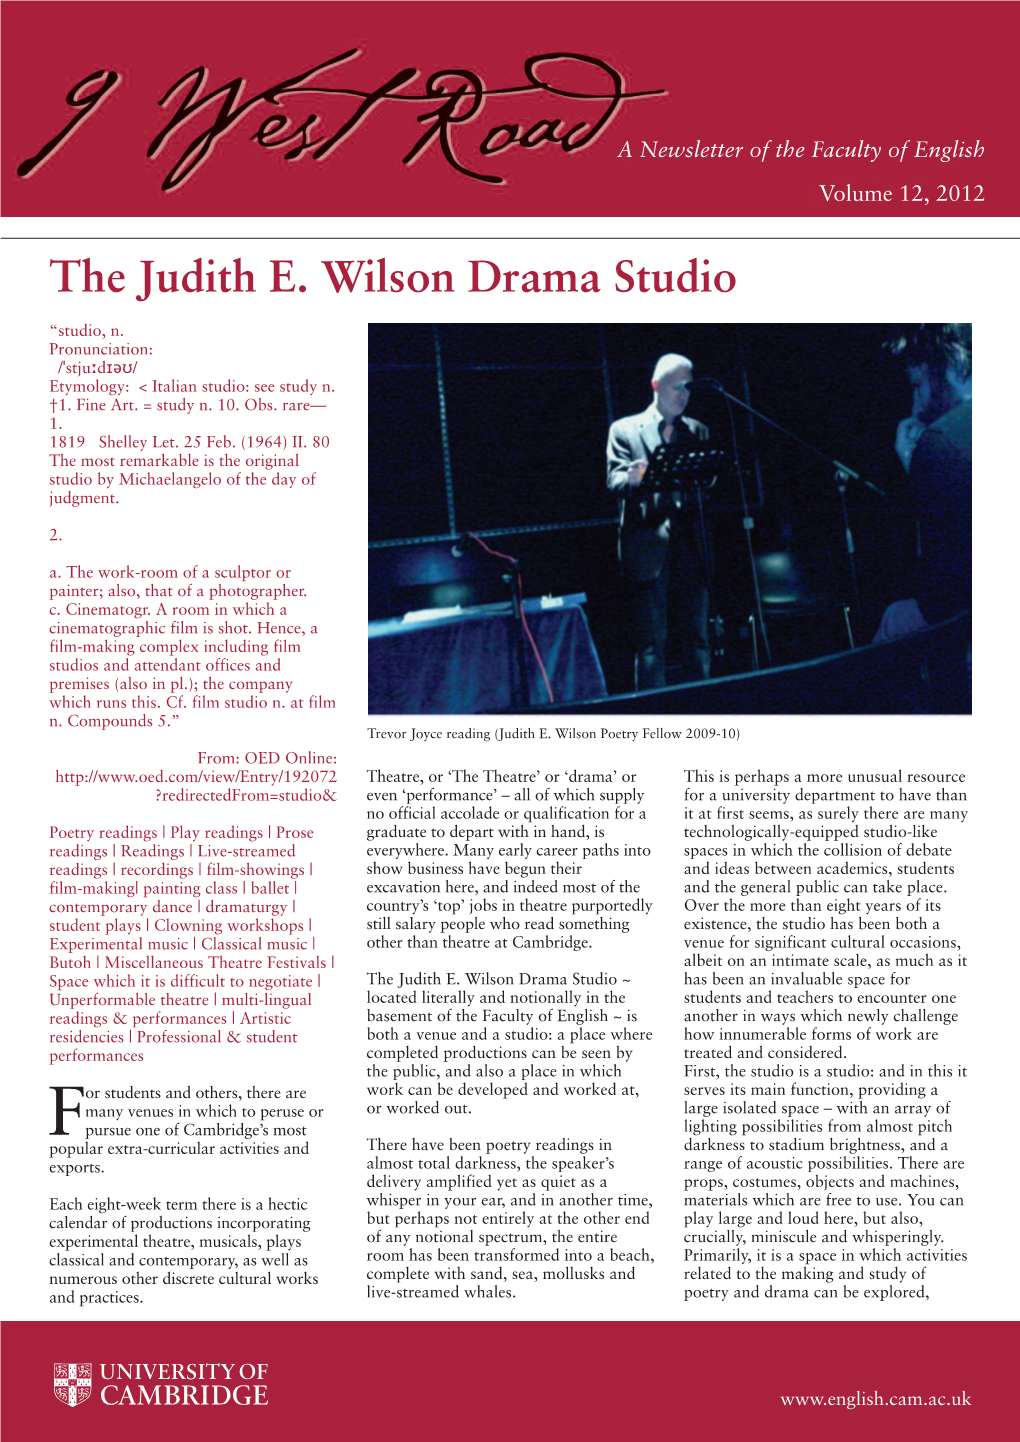 The Judith E. Wilson Drama Studio